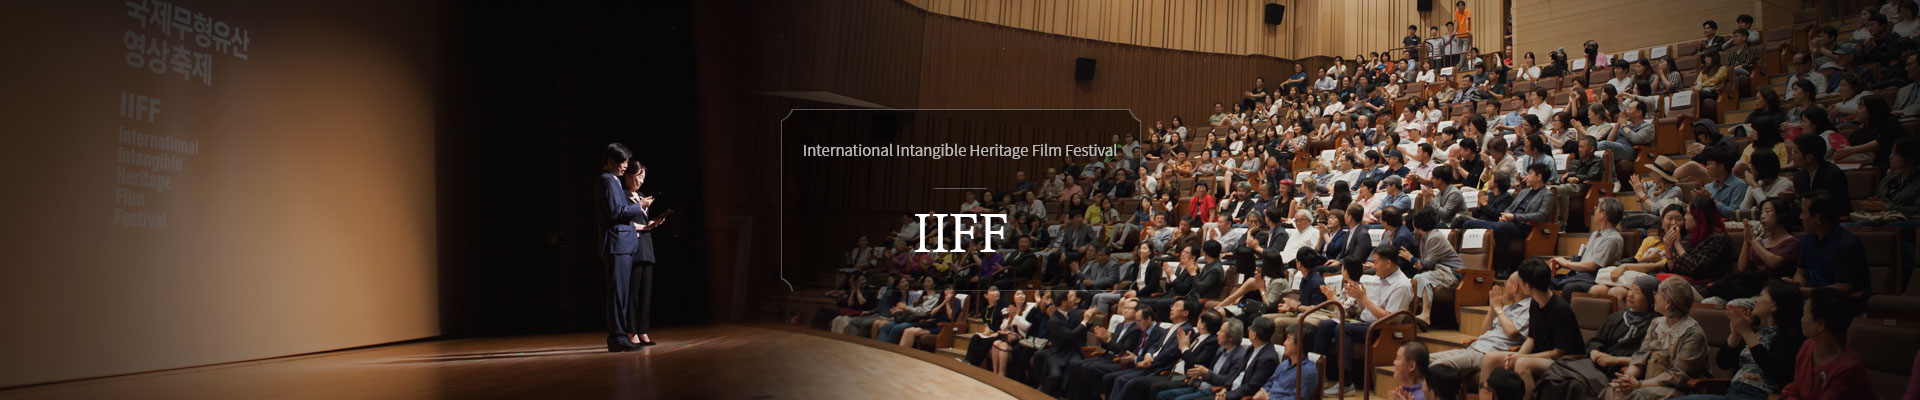 International Intangible Heritage Film Festival, IIFF